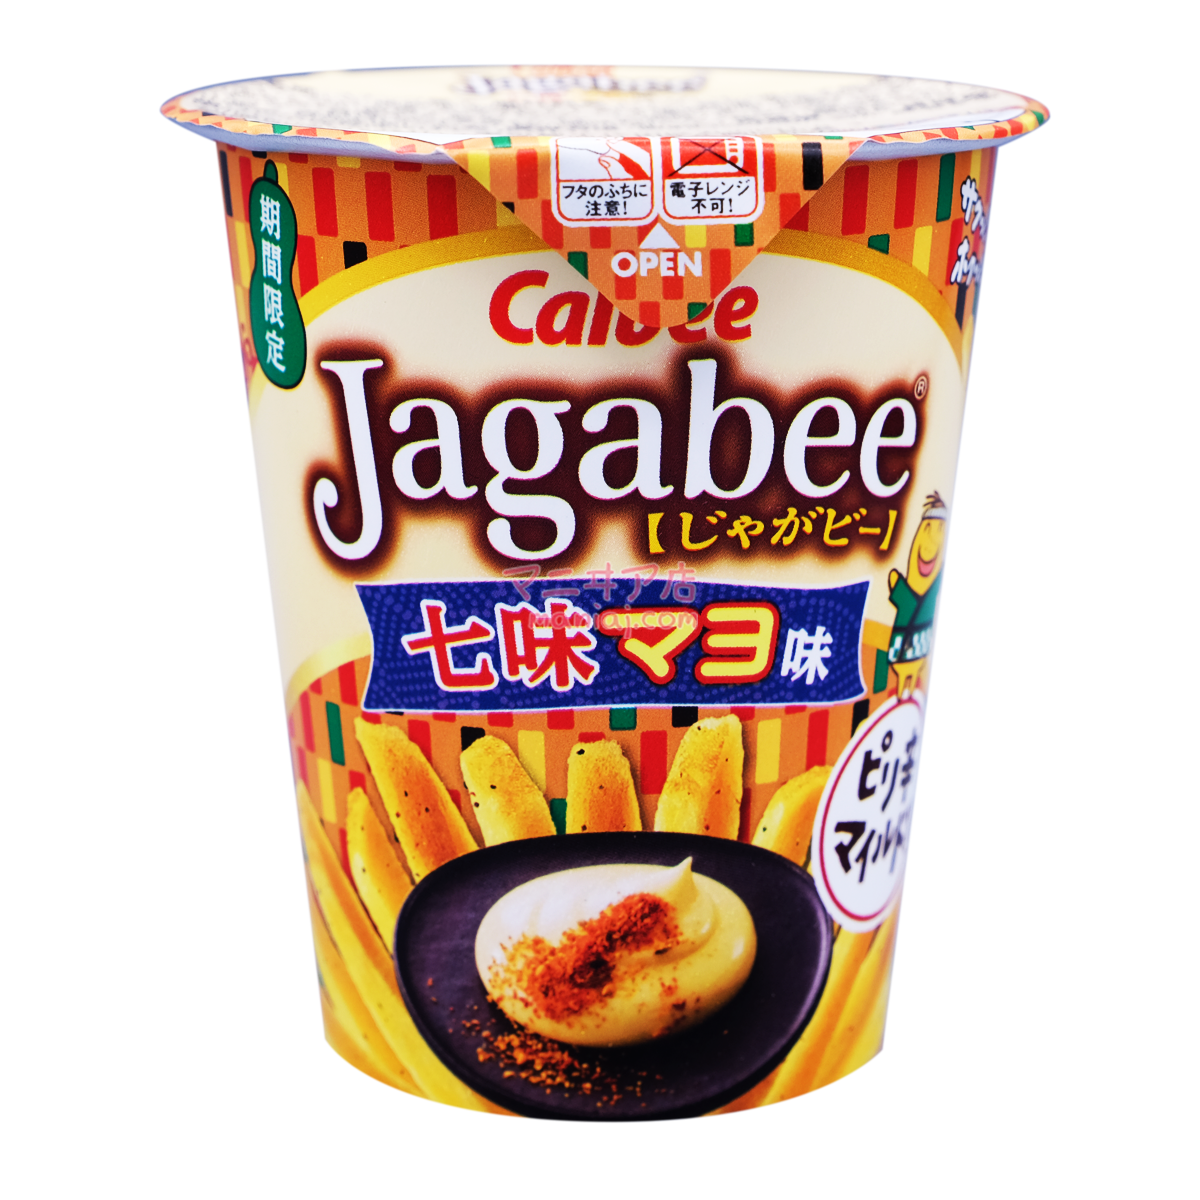 Jagabee 七味蛋黃醬味薯條